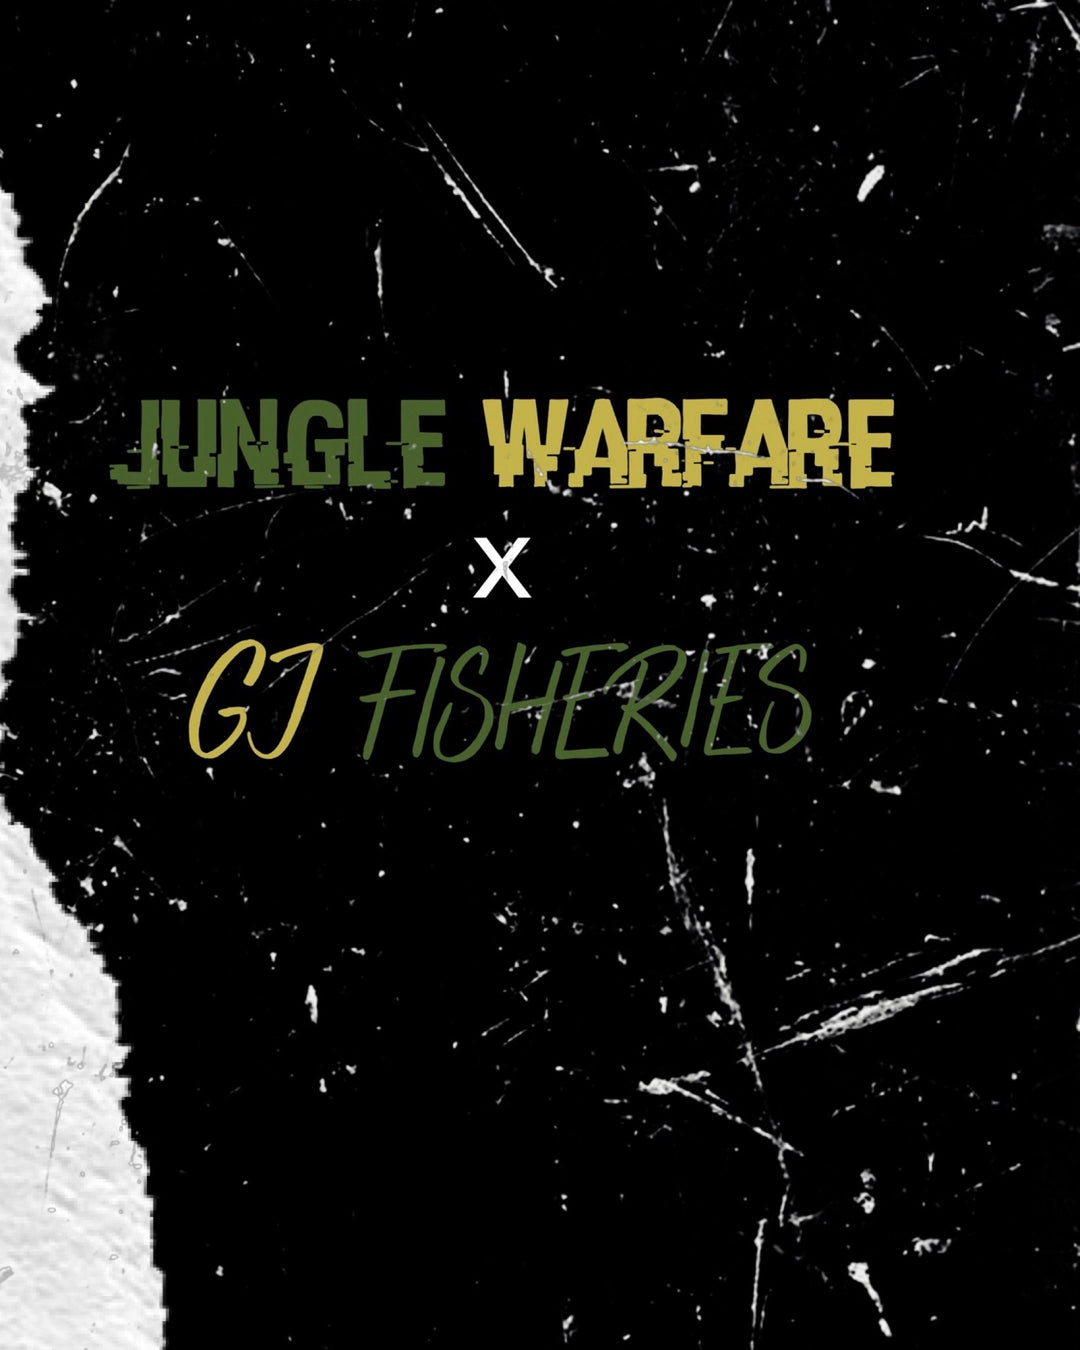 GJ Fisheries Manchester - Jungle warfare clothing ™